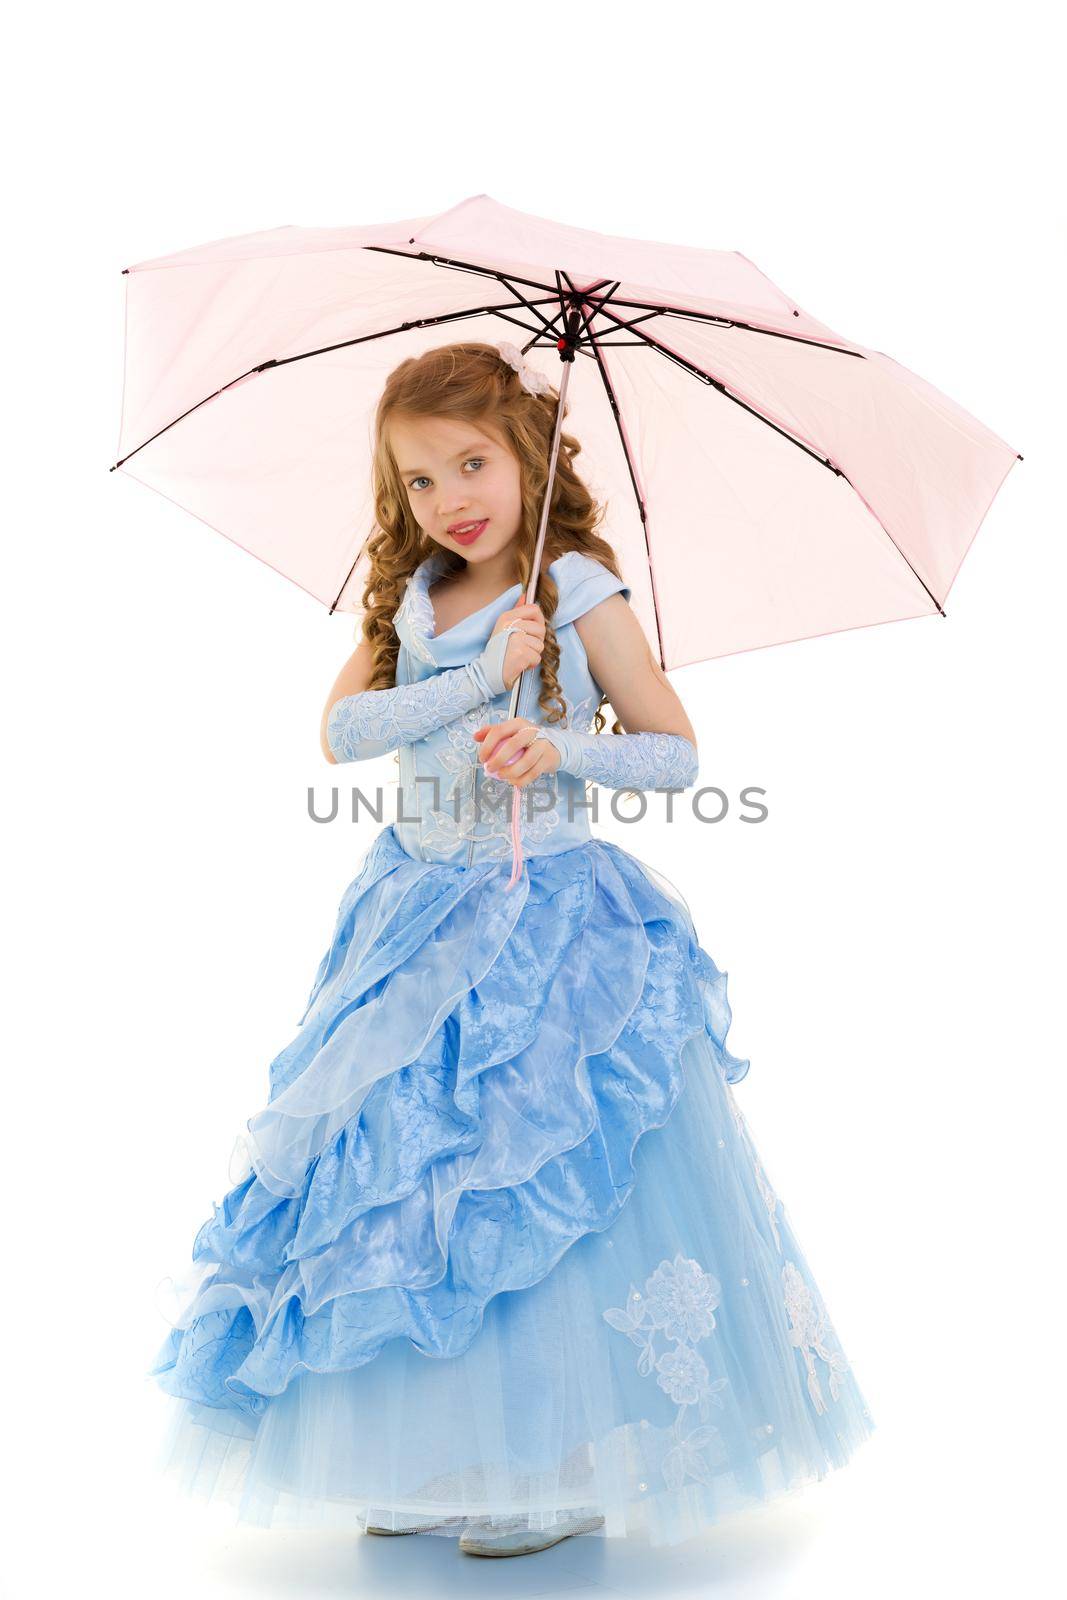 Girl princess in a long elegant dress under an umbrella. by kolesnikov_studio